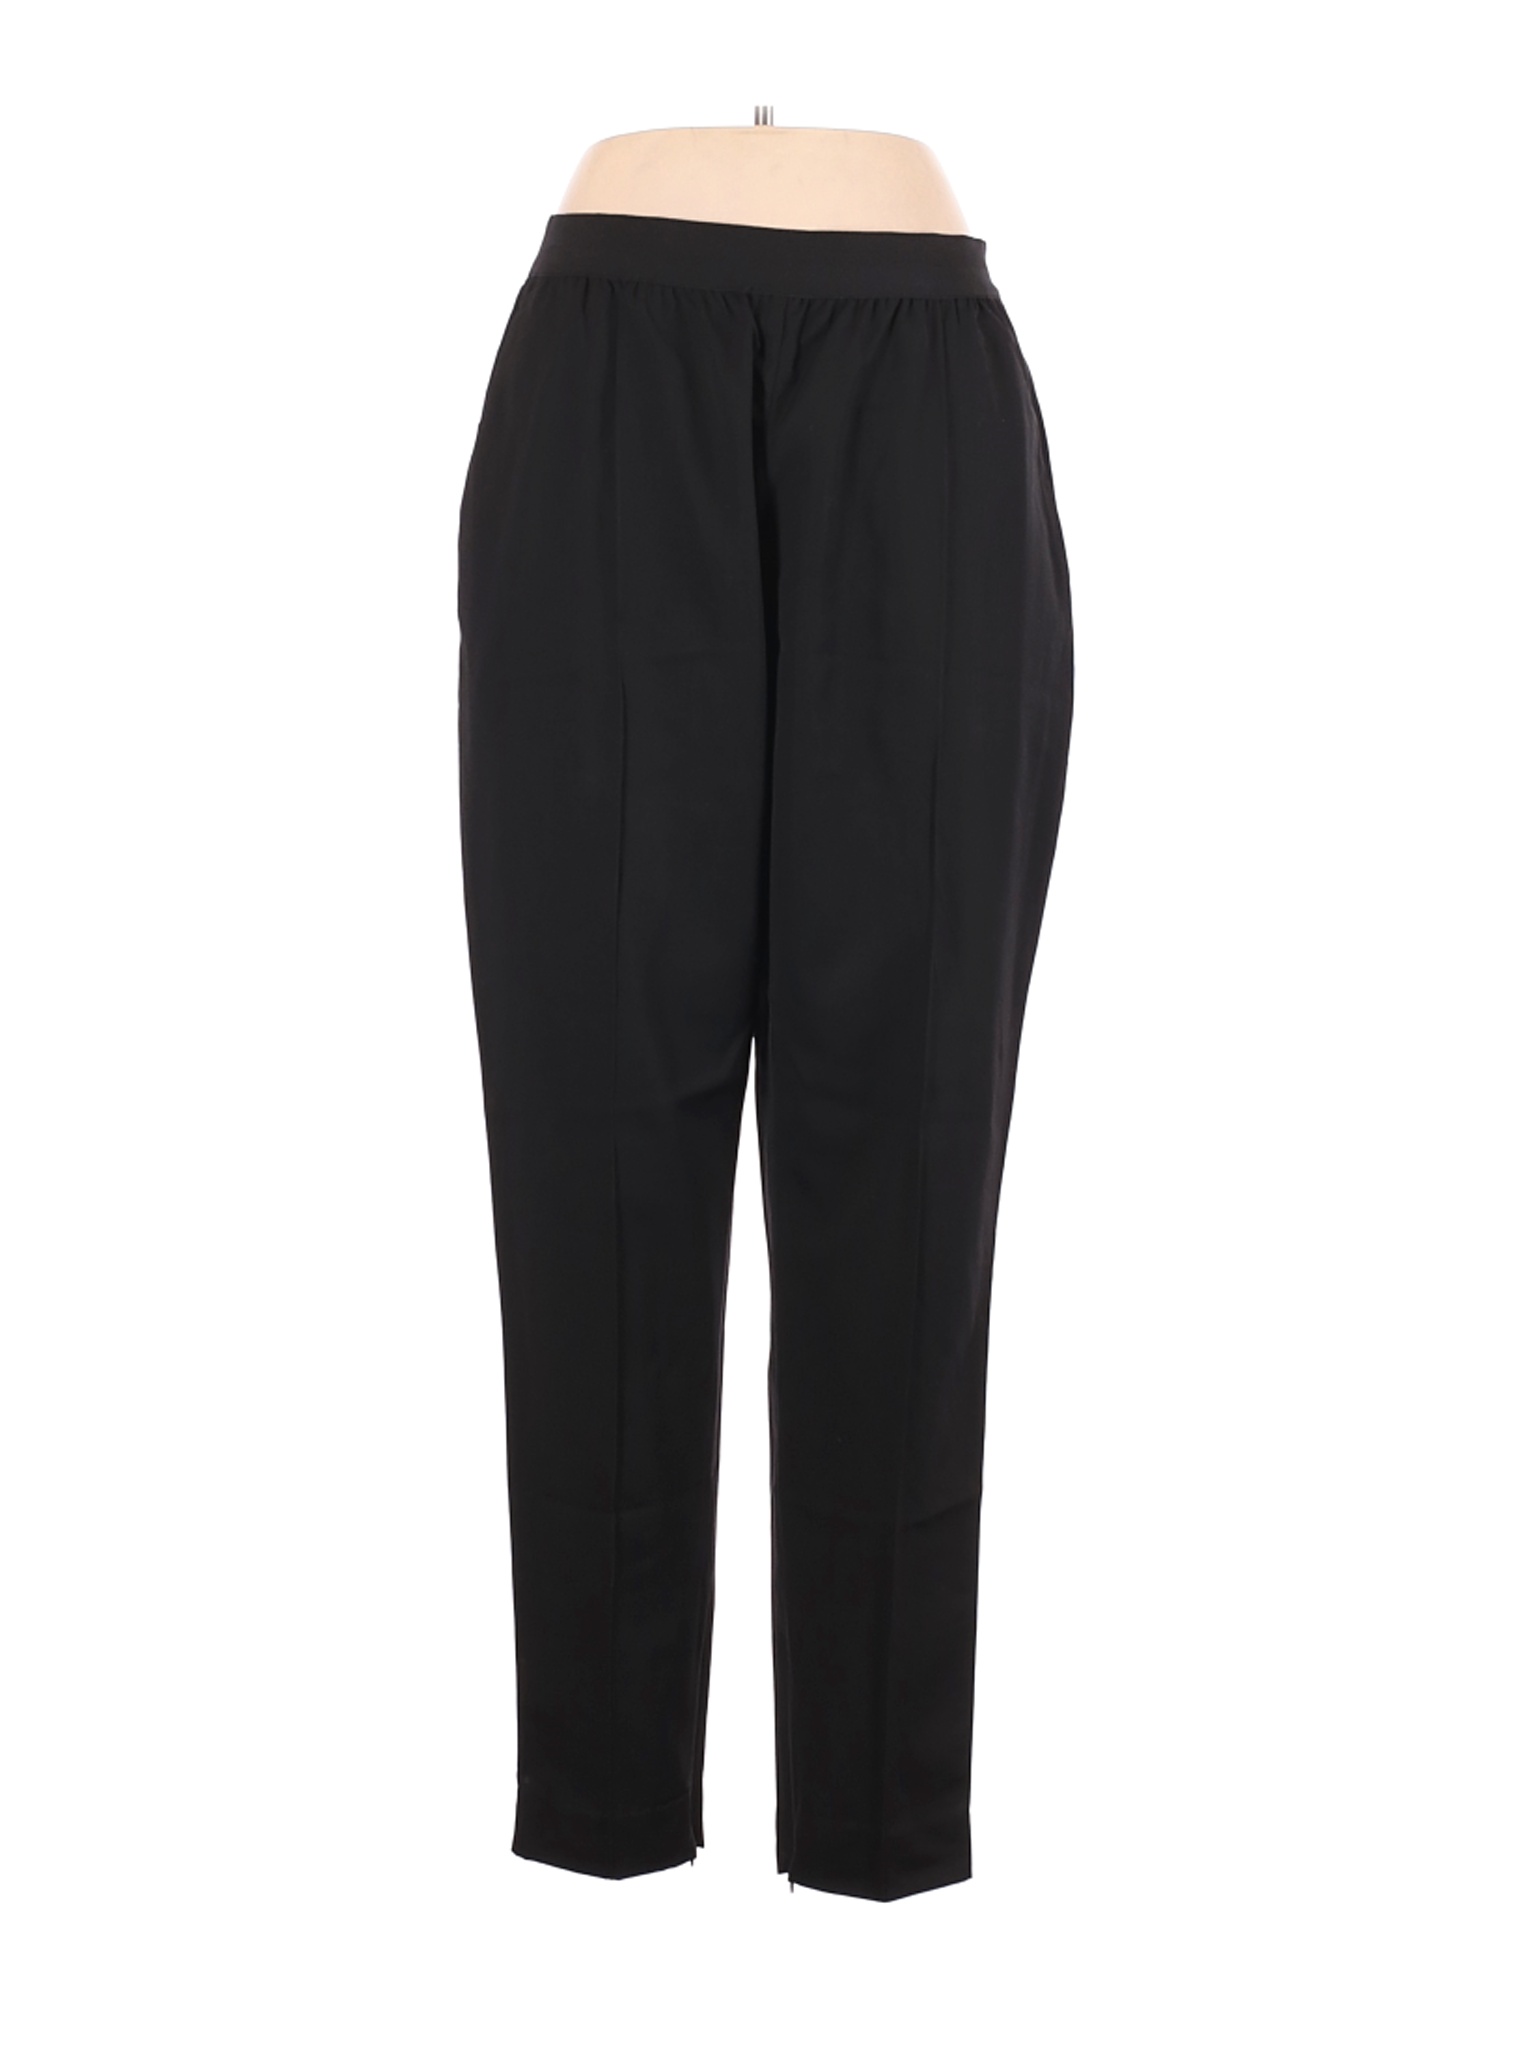 Everlane Women Black Wool Pants 12 | eBay